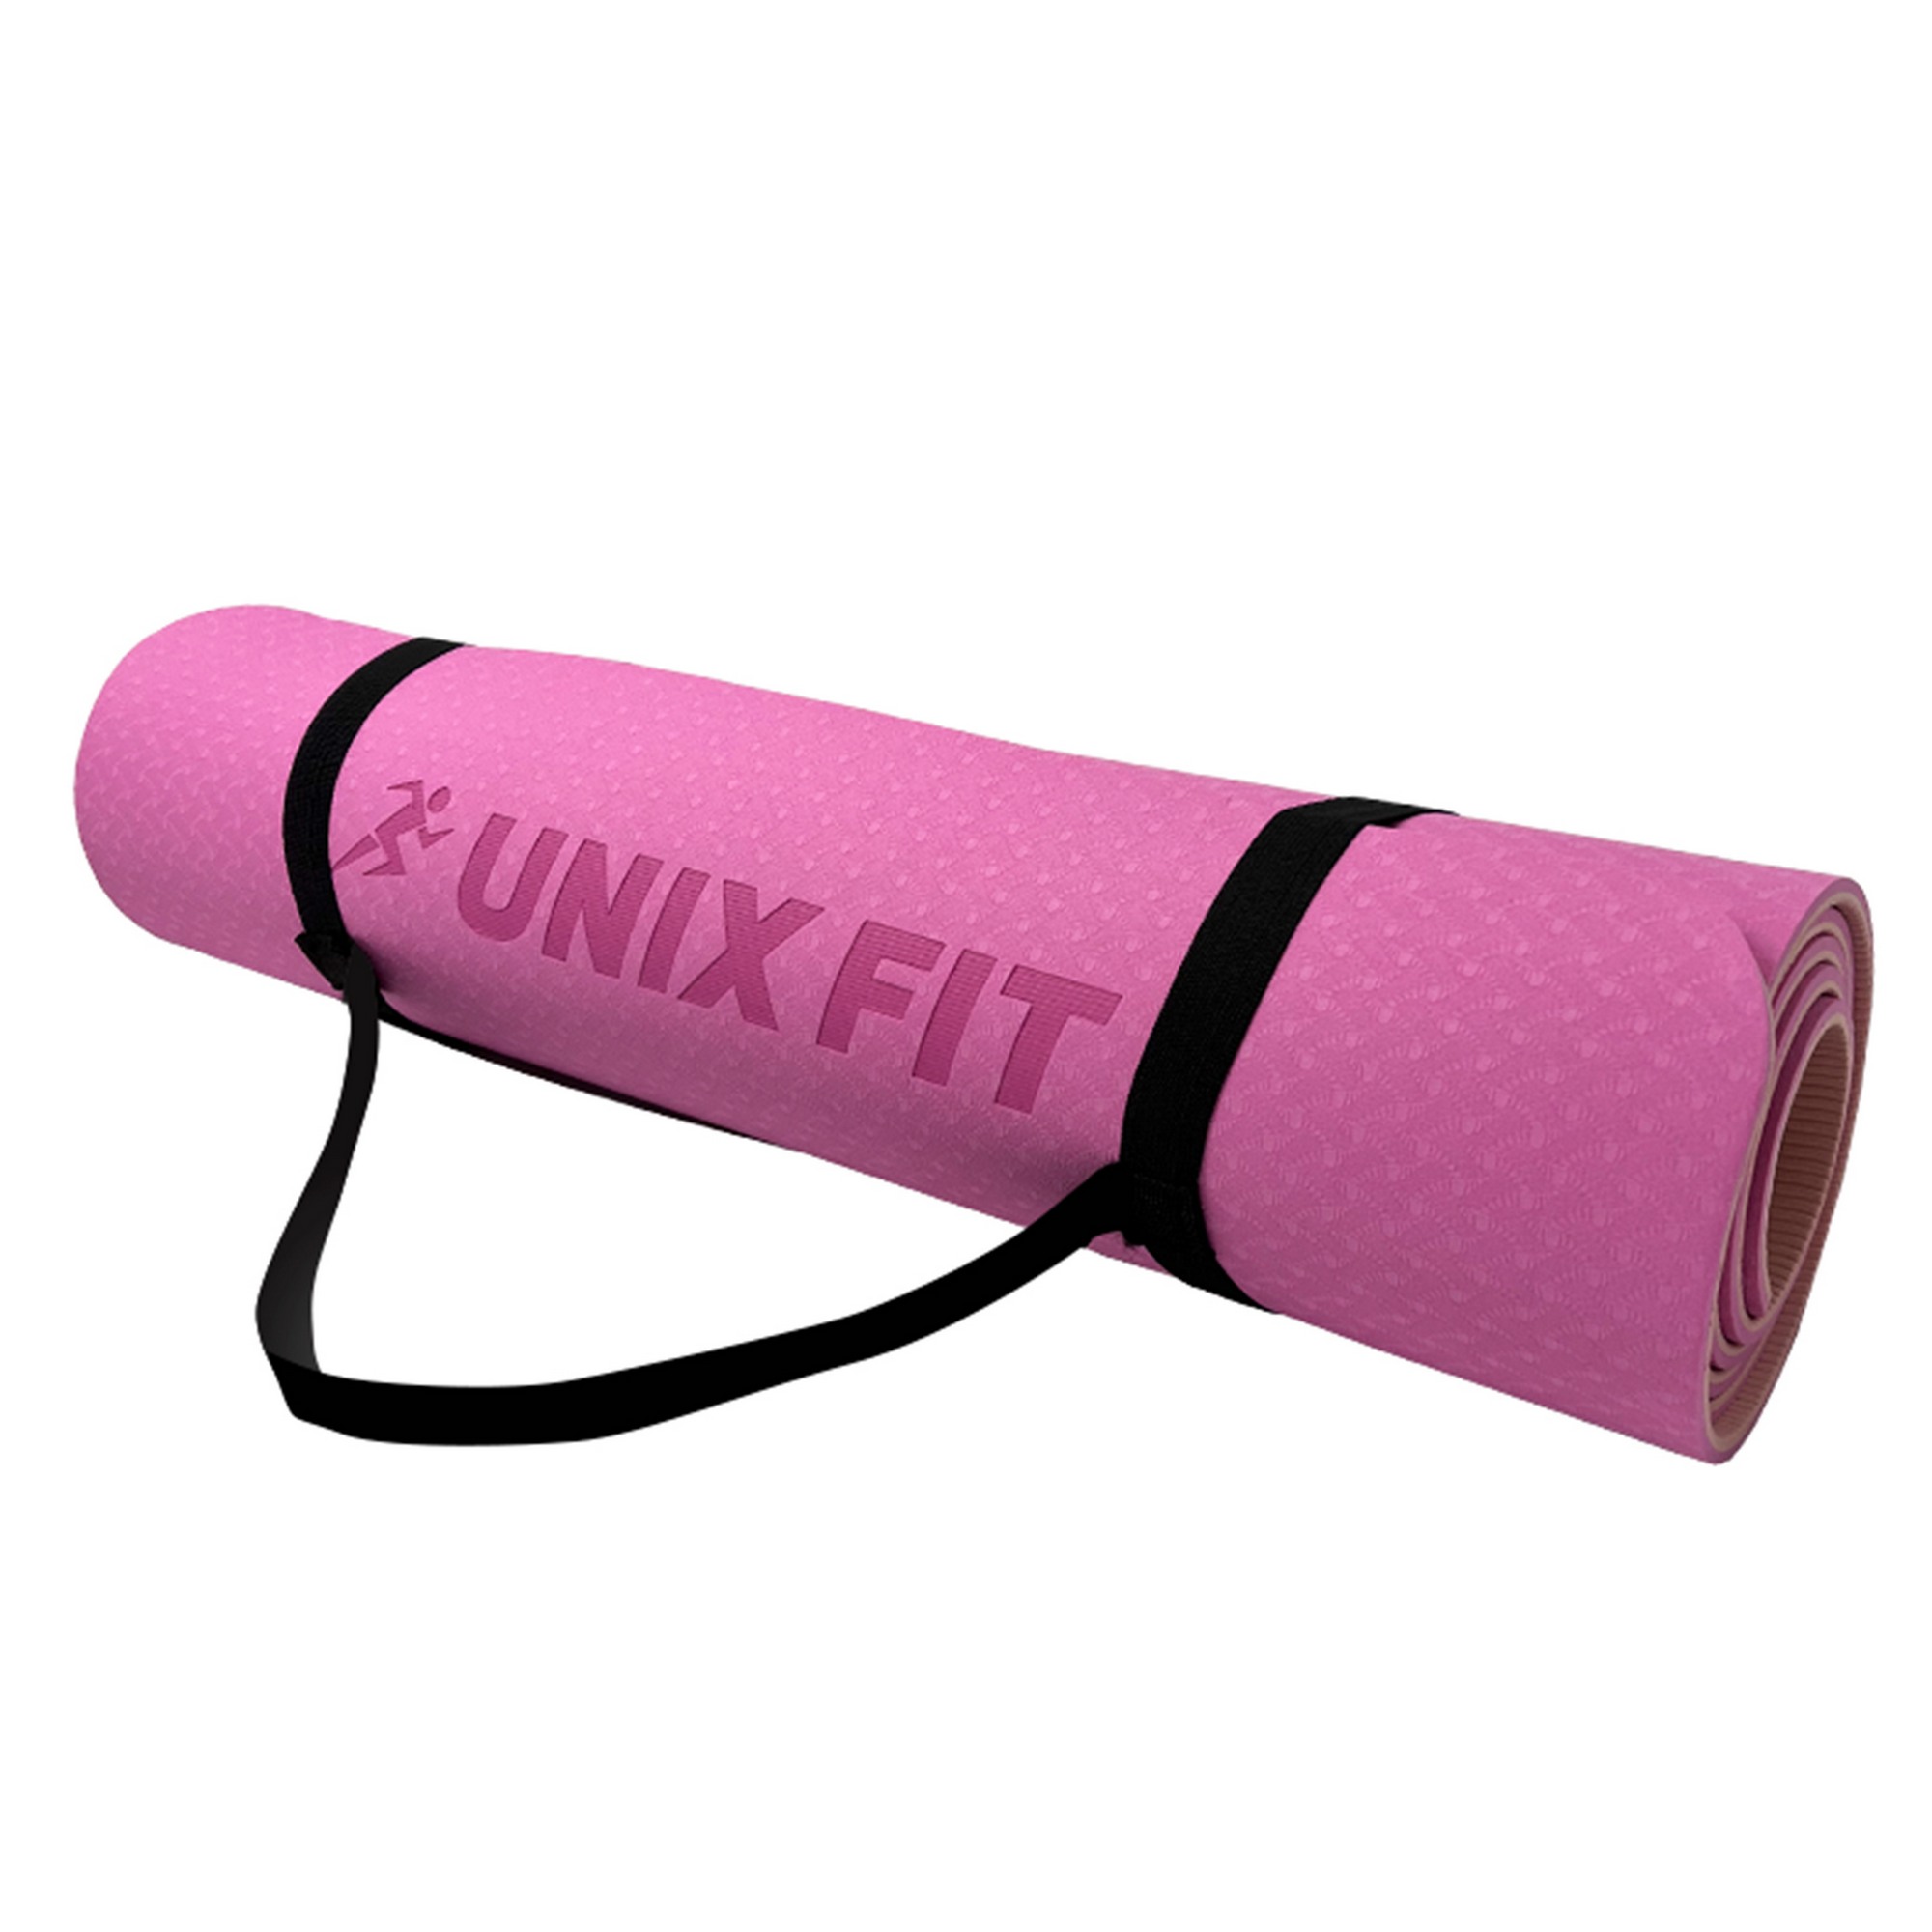 Коврик для йоги и фитнеса двусторонний, 180х61х0,8см UnixFit YMU8MMPK двуцветный, розовый 2000_2000